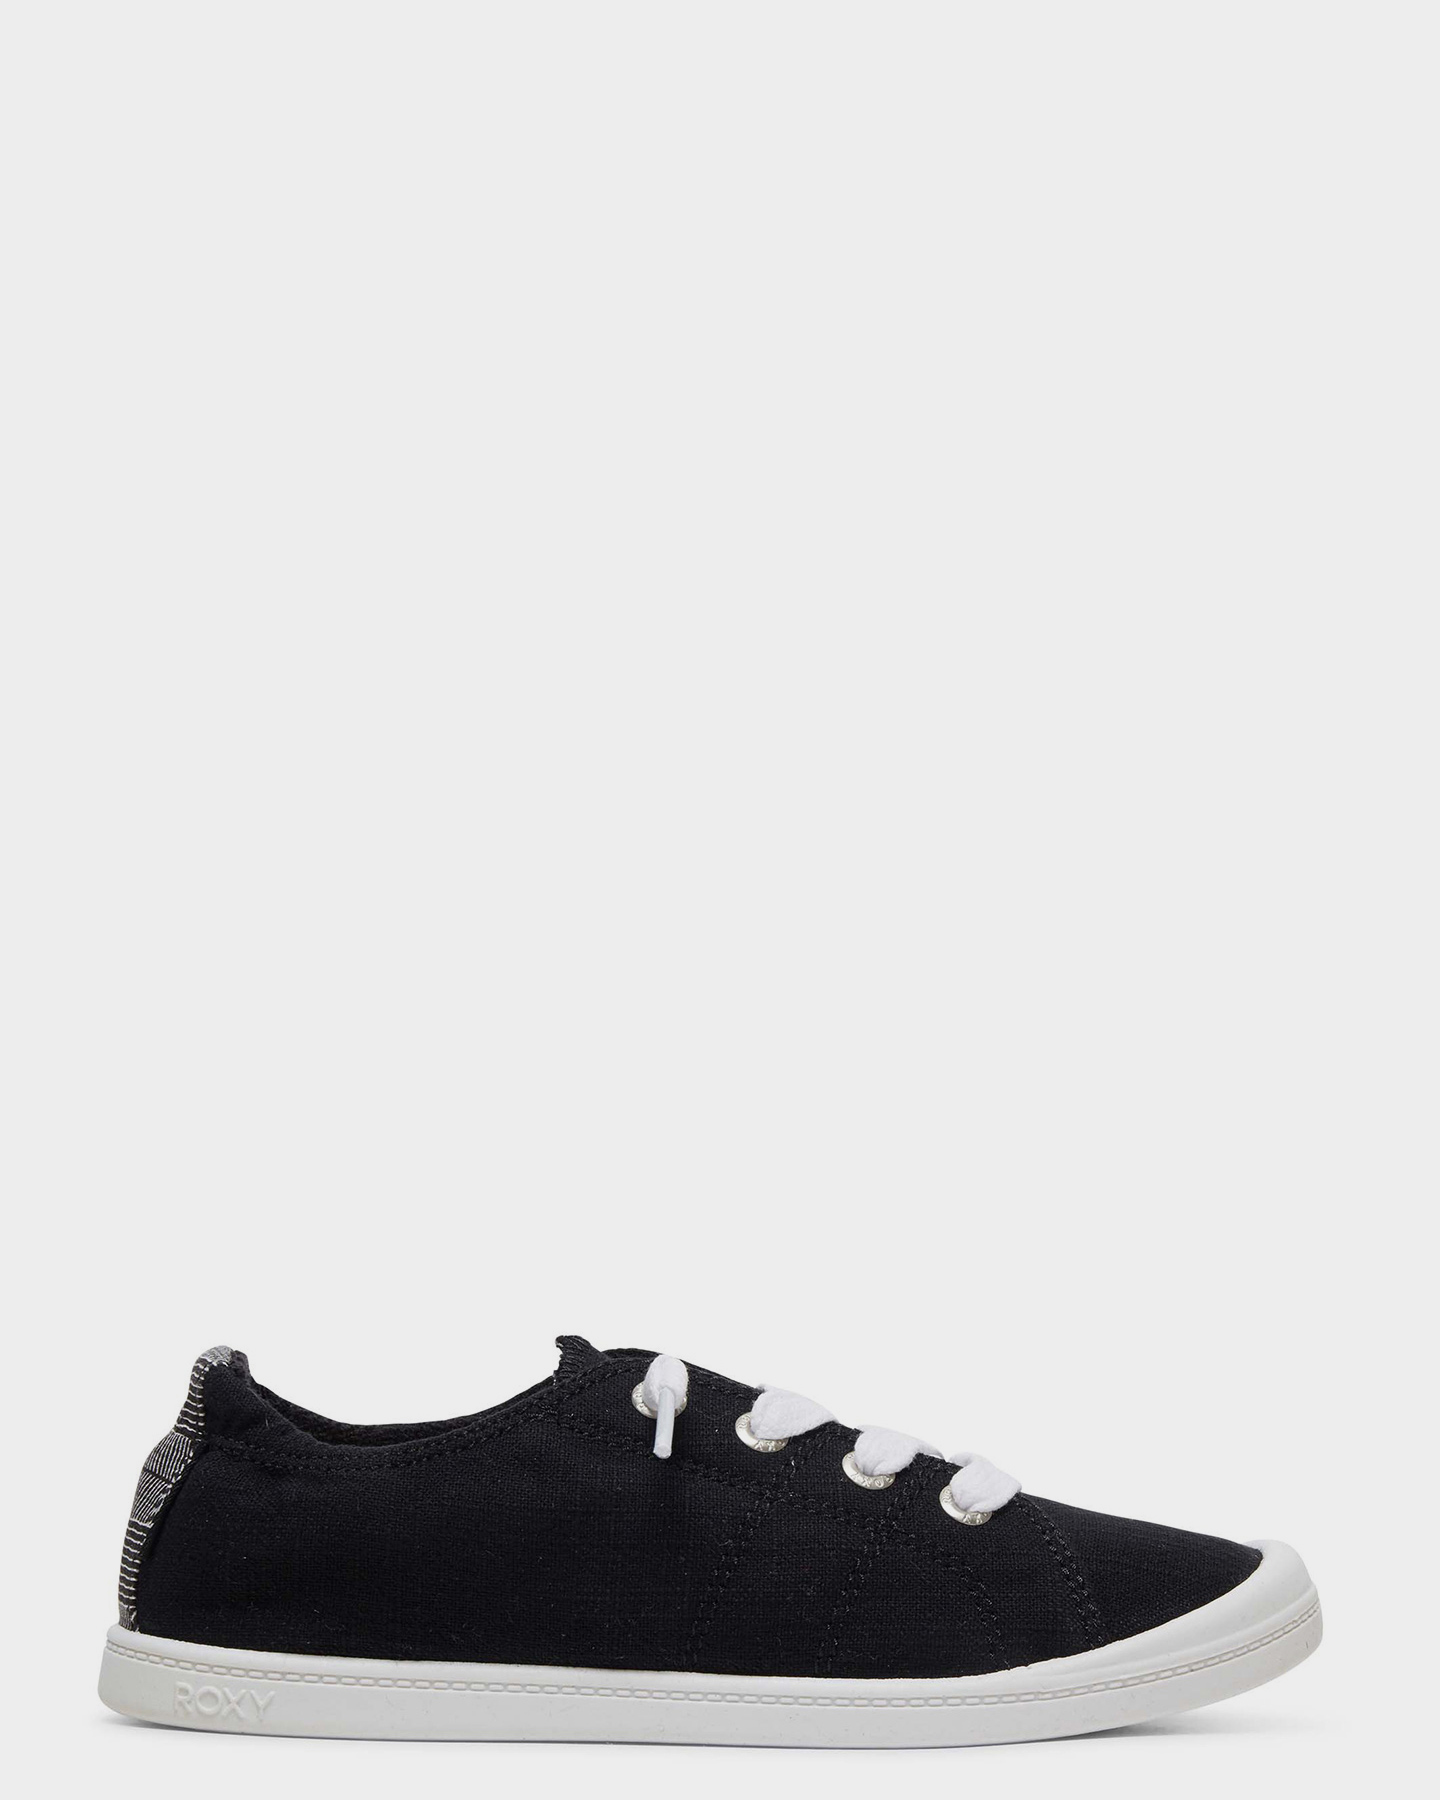 black roxy shoes